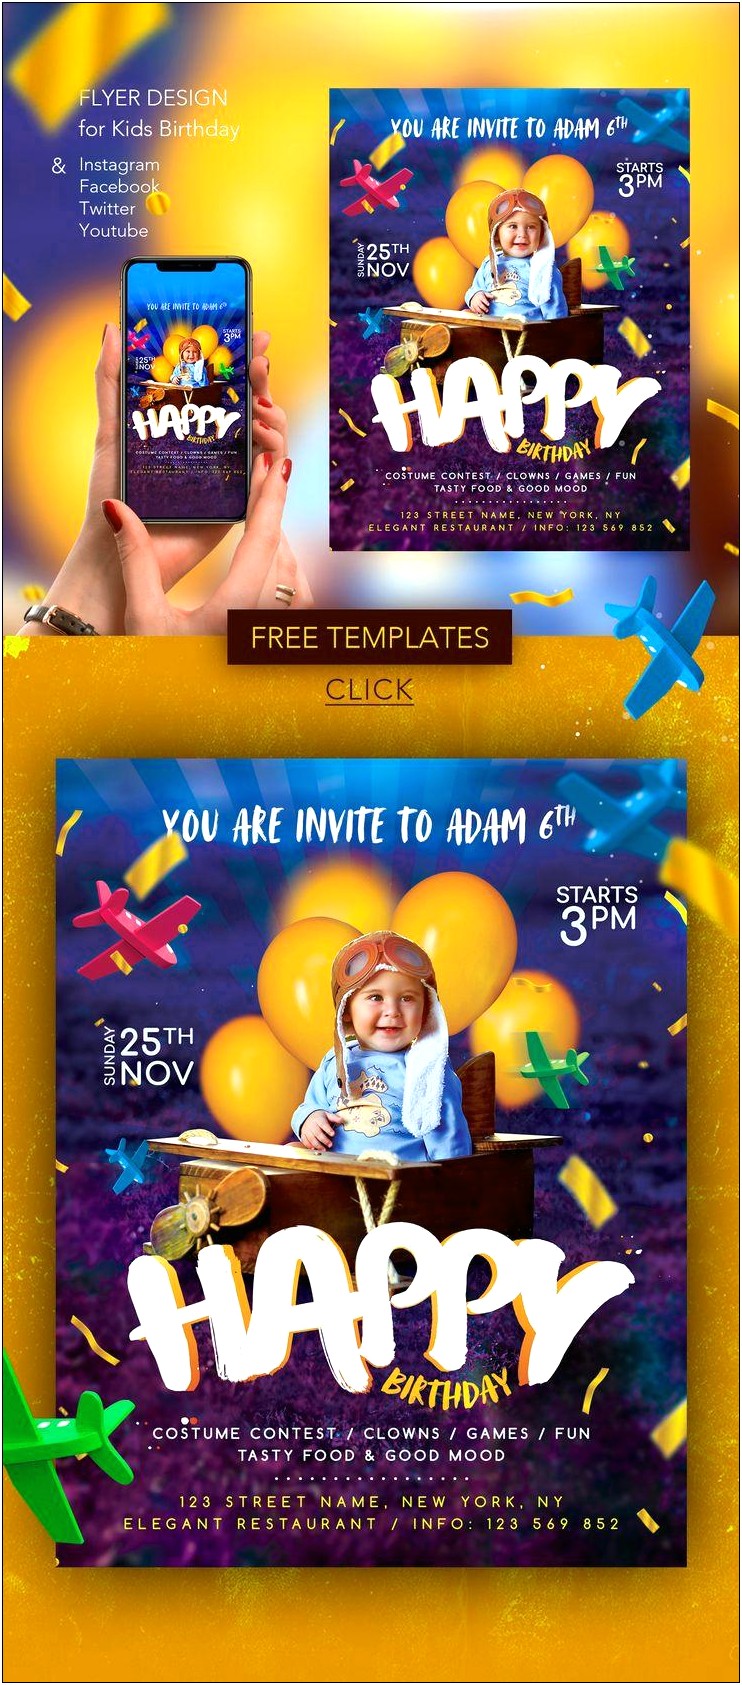 Free Photoshop Templates For Birthday Invitations